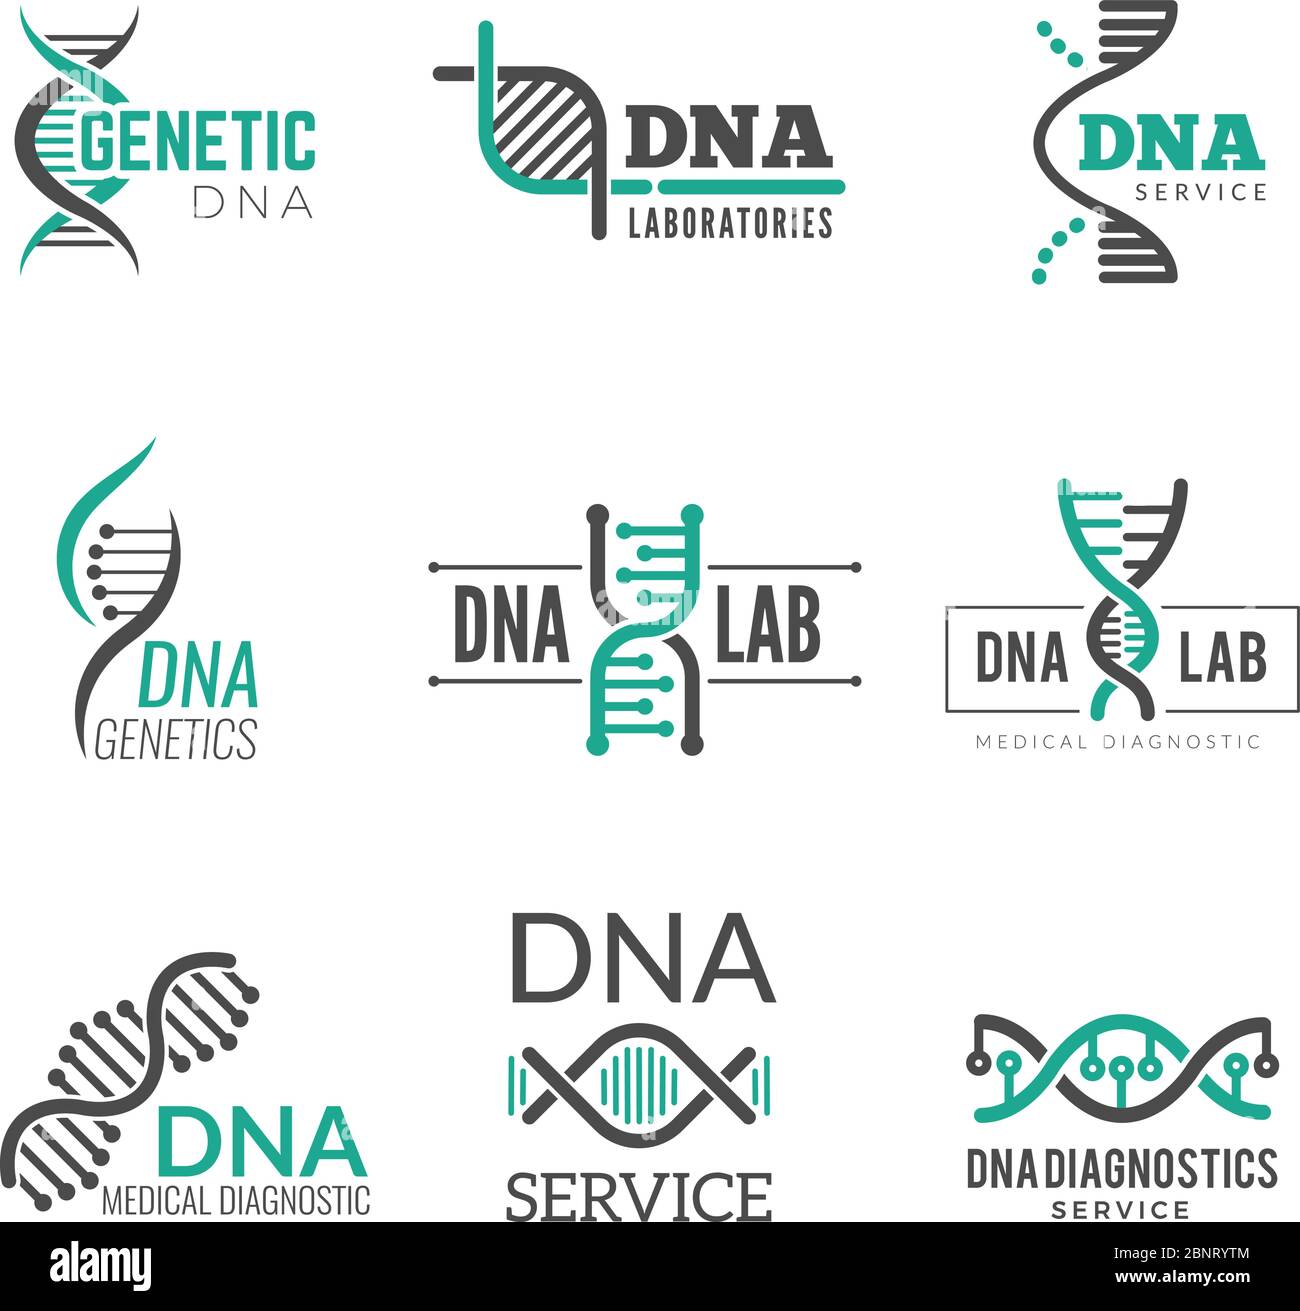 Dna logo. Genetic science symbols helix biotech vector business identity Stock Vector